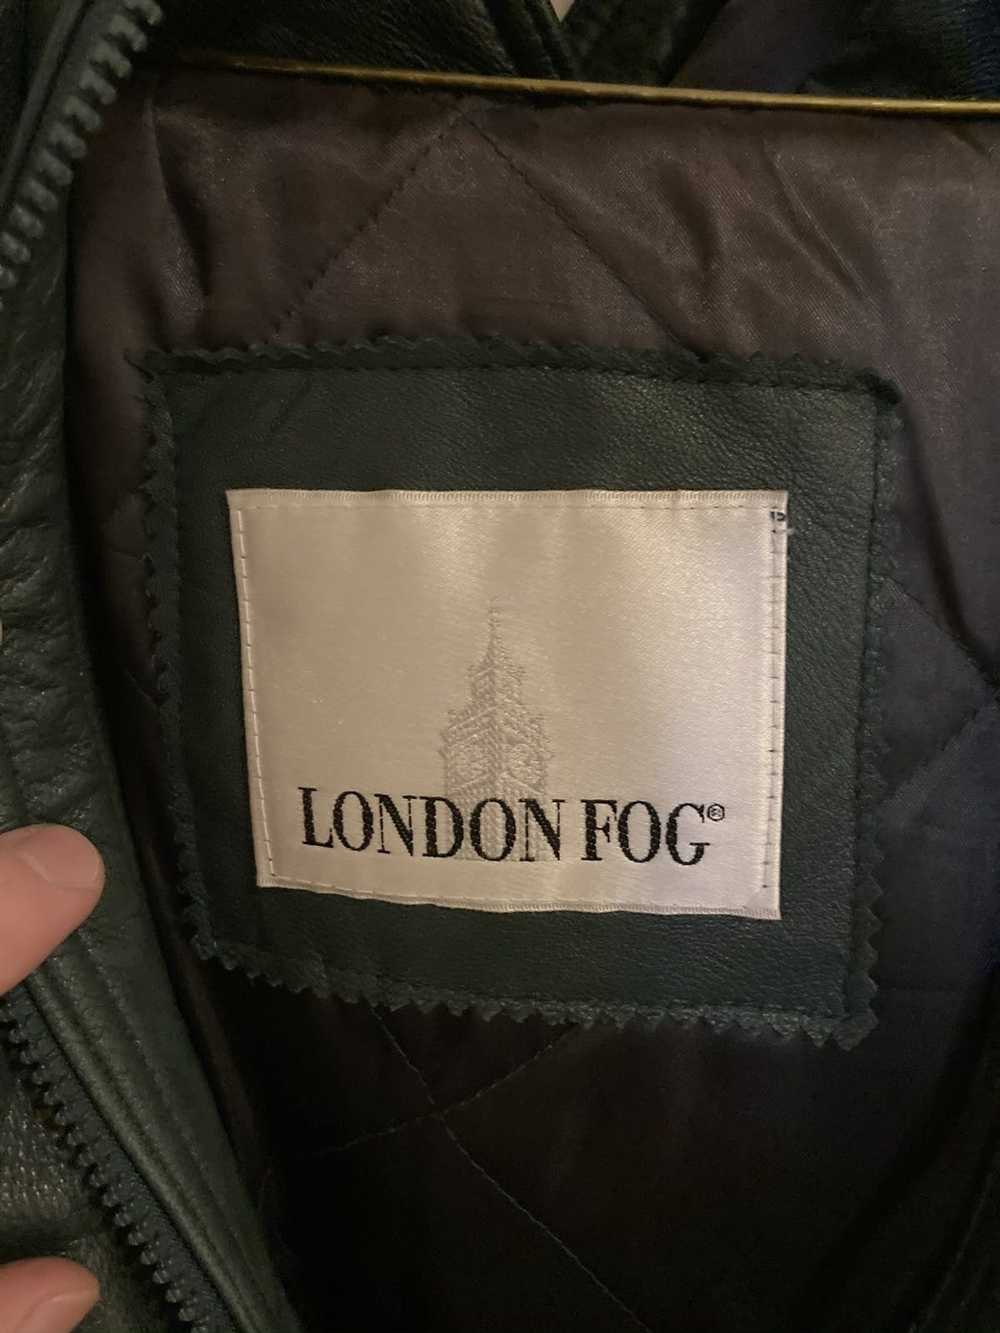 London Fog London Fog vintage leather jacket - image 2